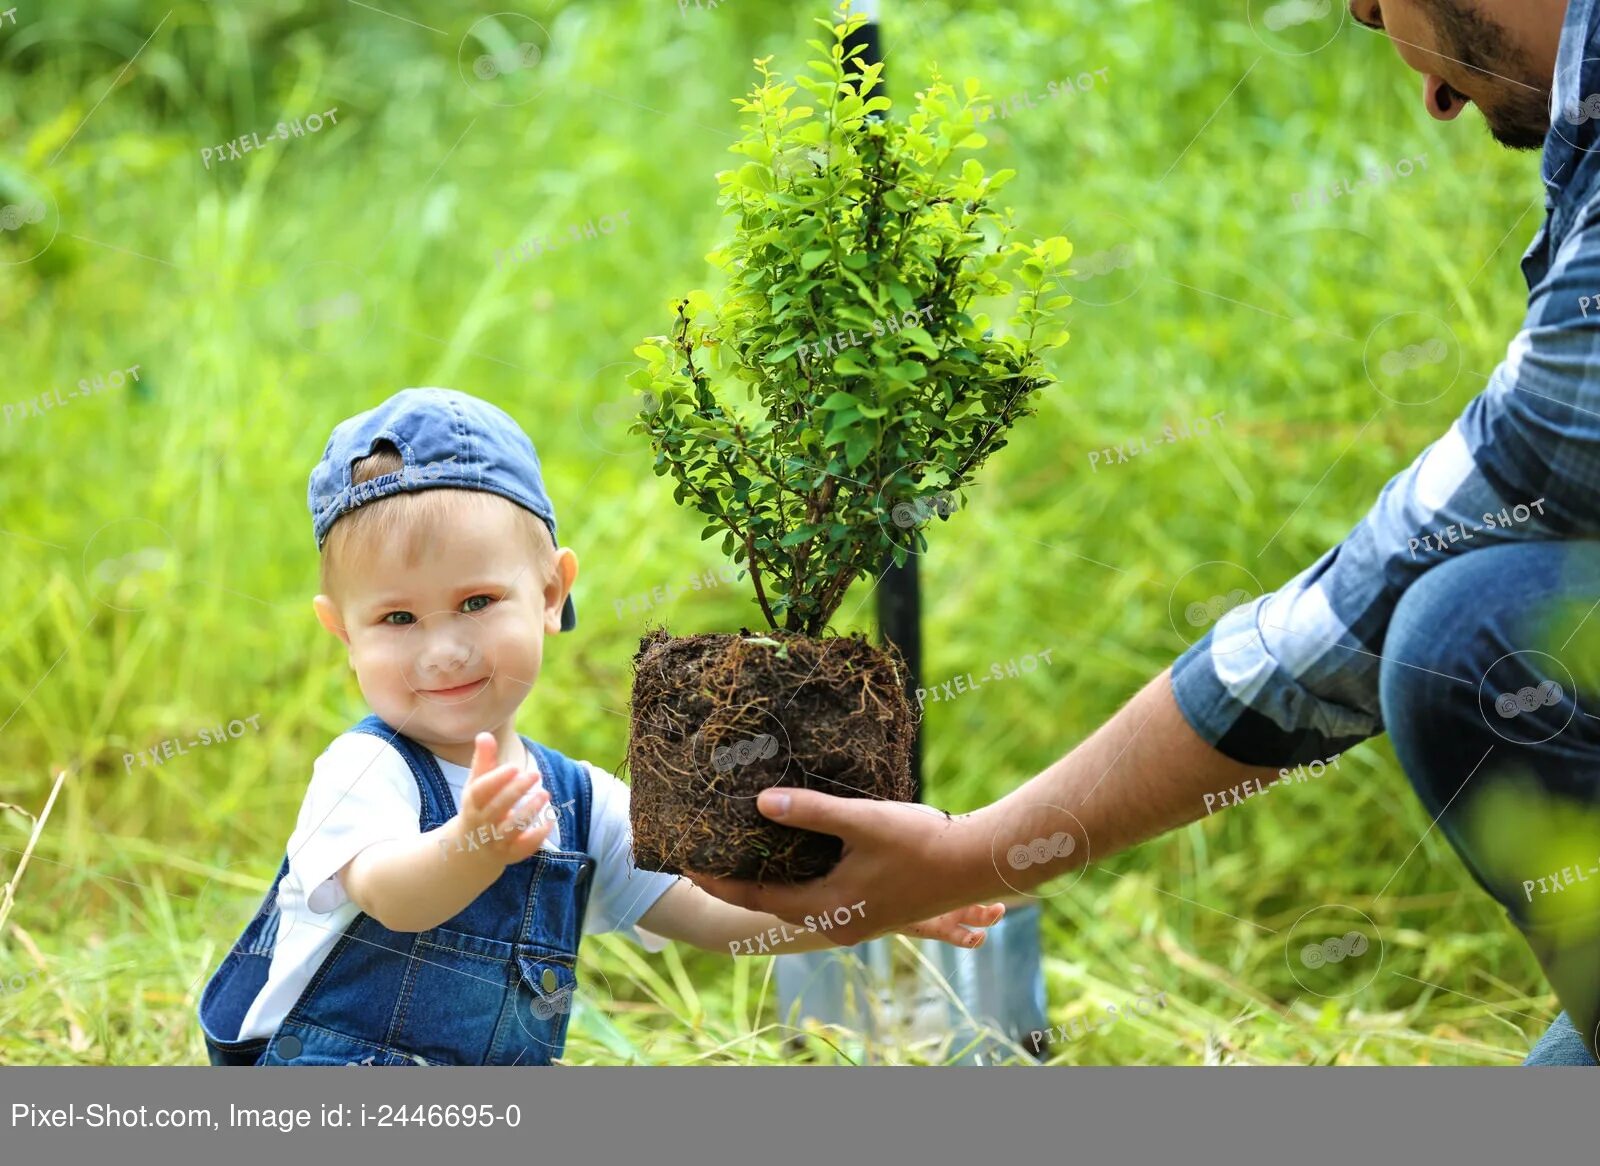 Посадка деревьев. Дети сажают деревья. Дерево для детей. Посадка деревьев картинки. Boys plant